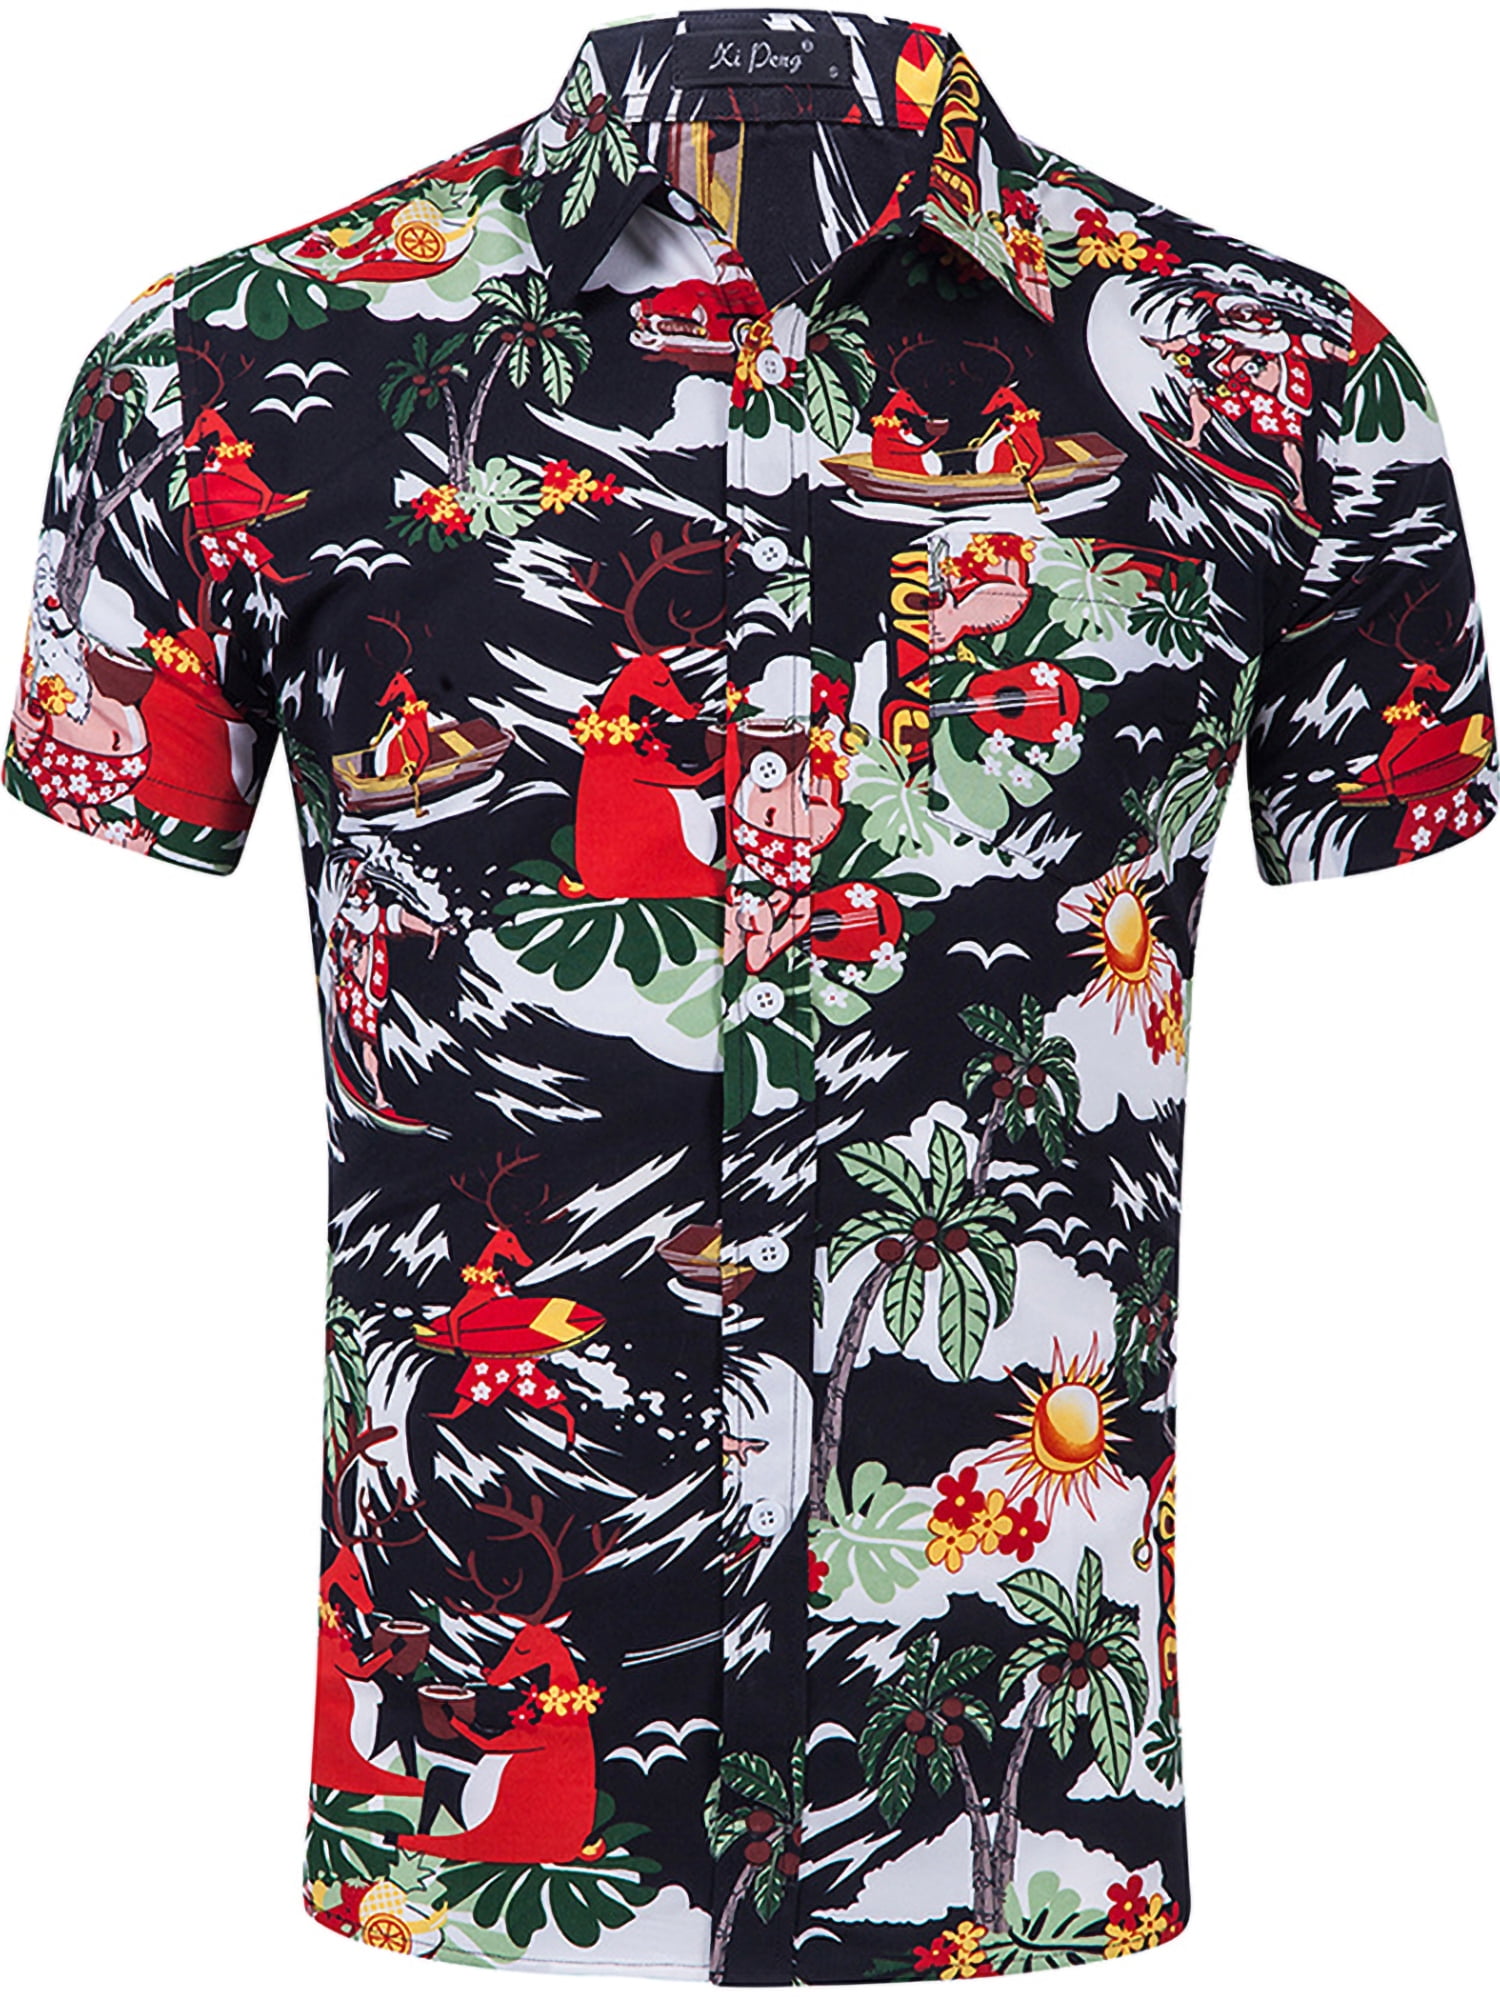 Mushrooms Hawaiian Hawaii Shirt Cotton Casual Button Down Short Sleeves Hawaiian Pocket Shirt Unisex Full Print for Tropical Summer Holiday Vacation Full Size S-5XL 